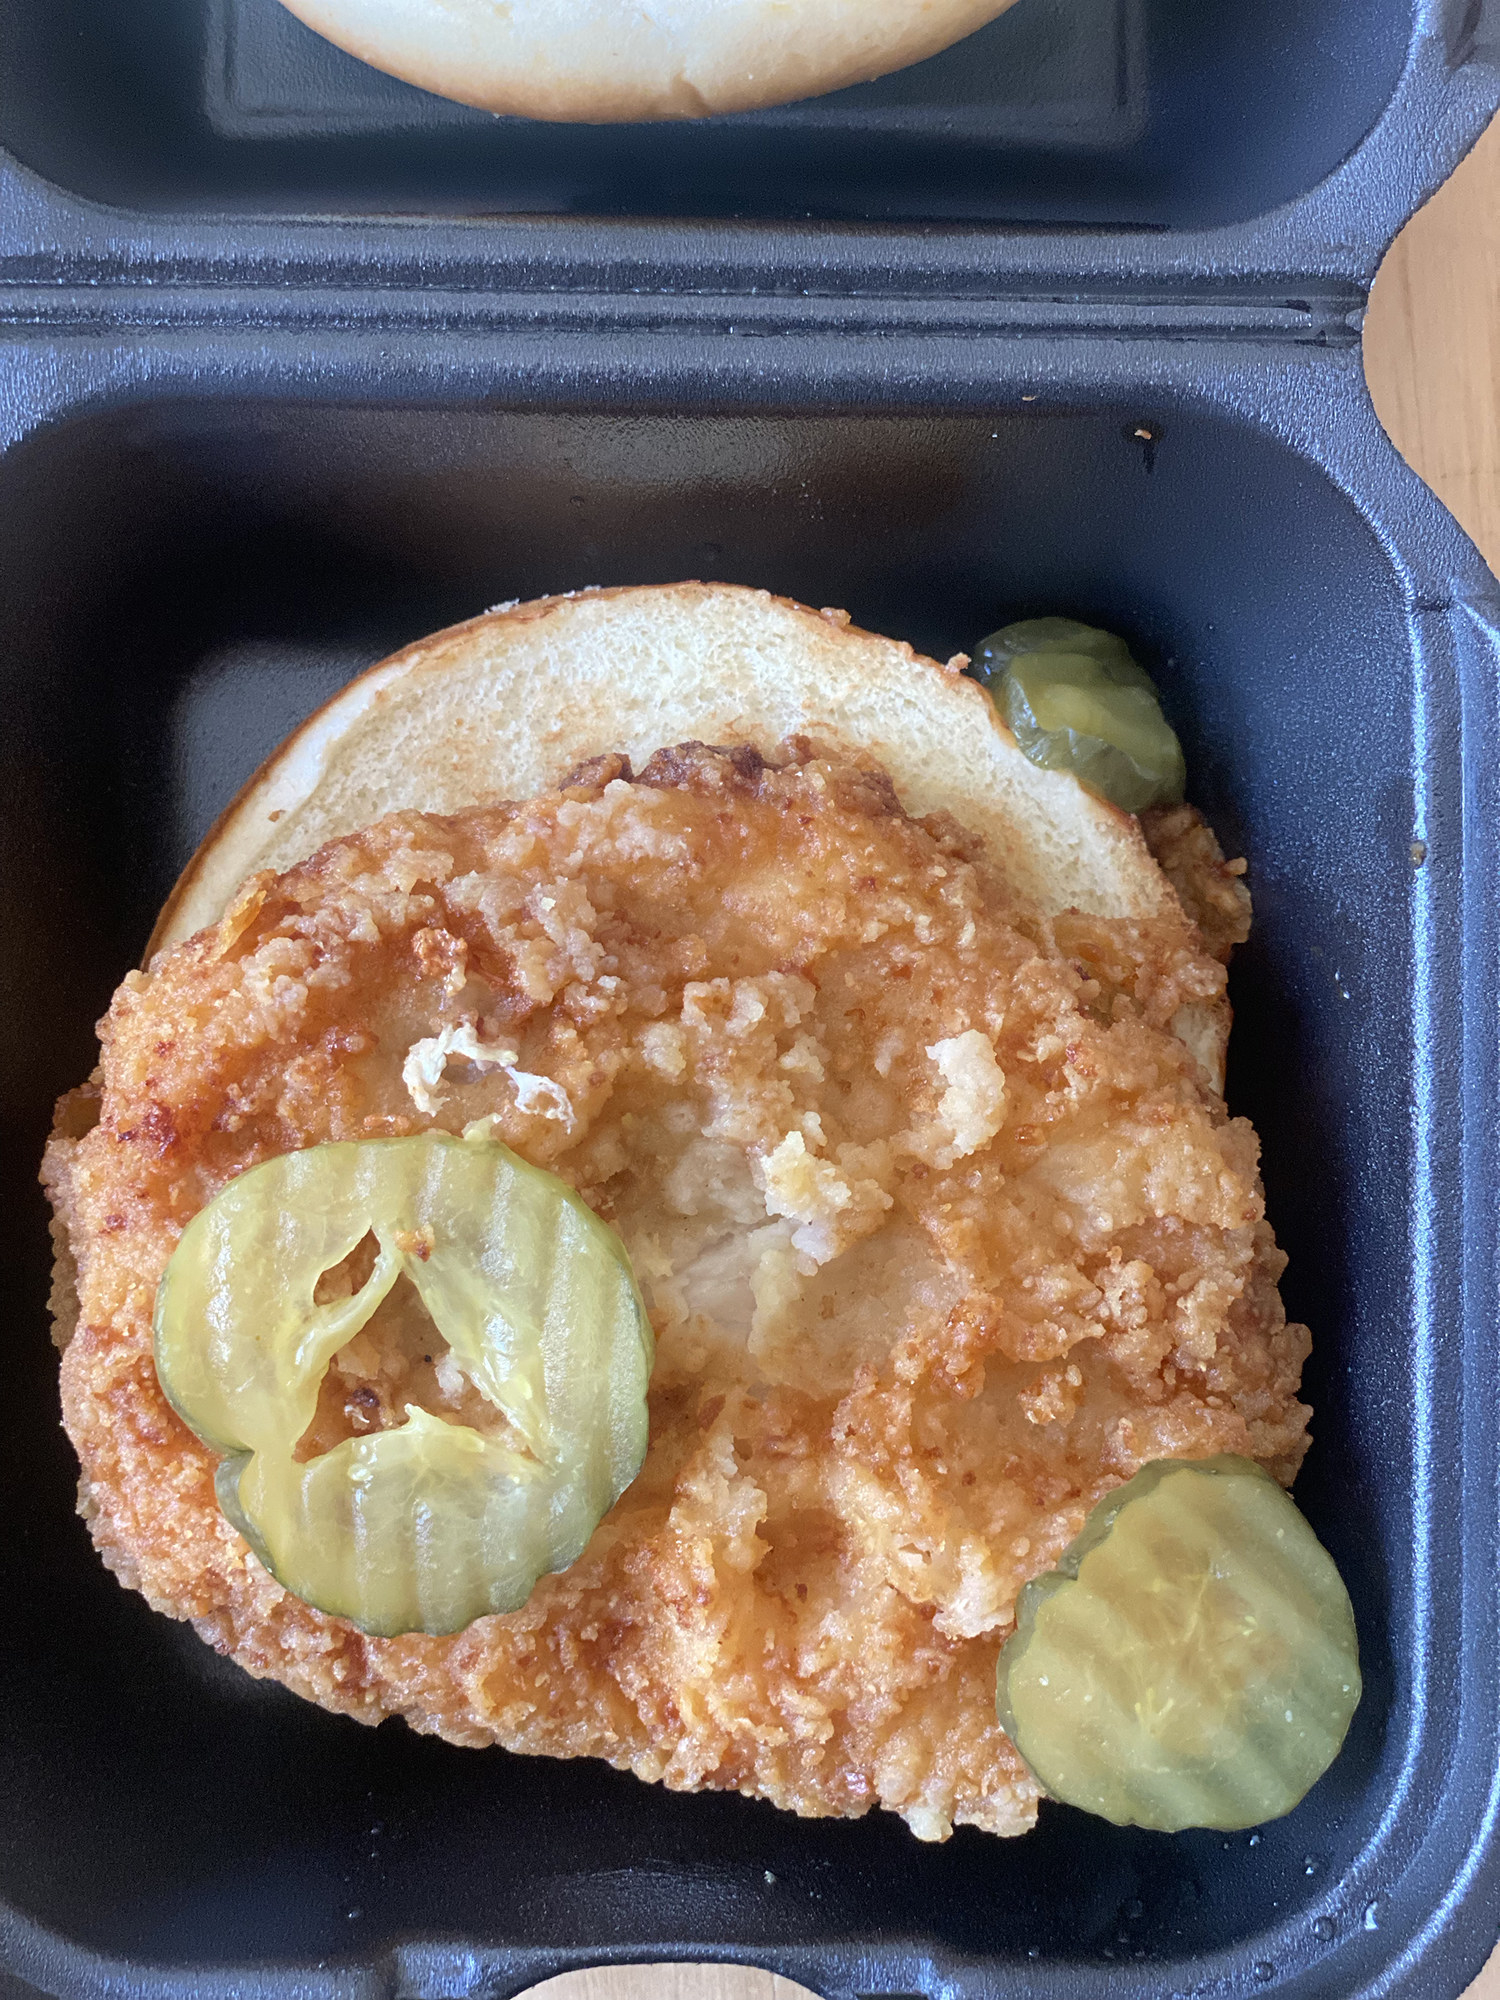 An opened chicken sandwich